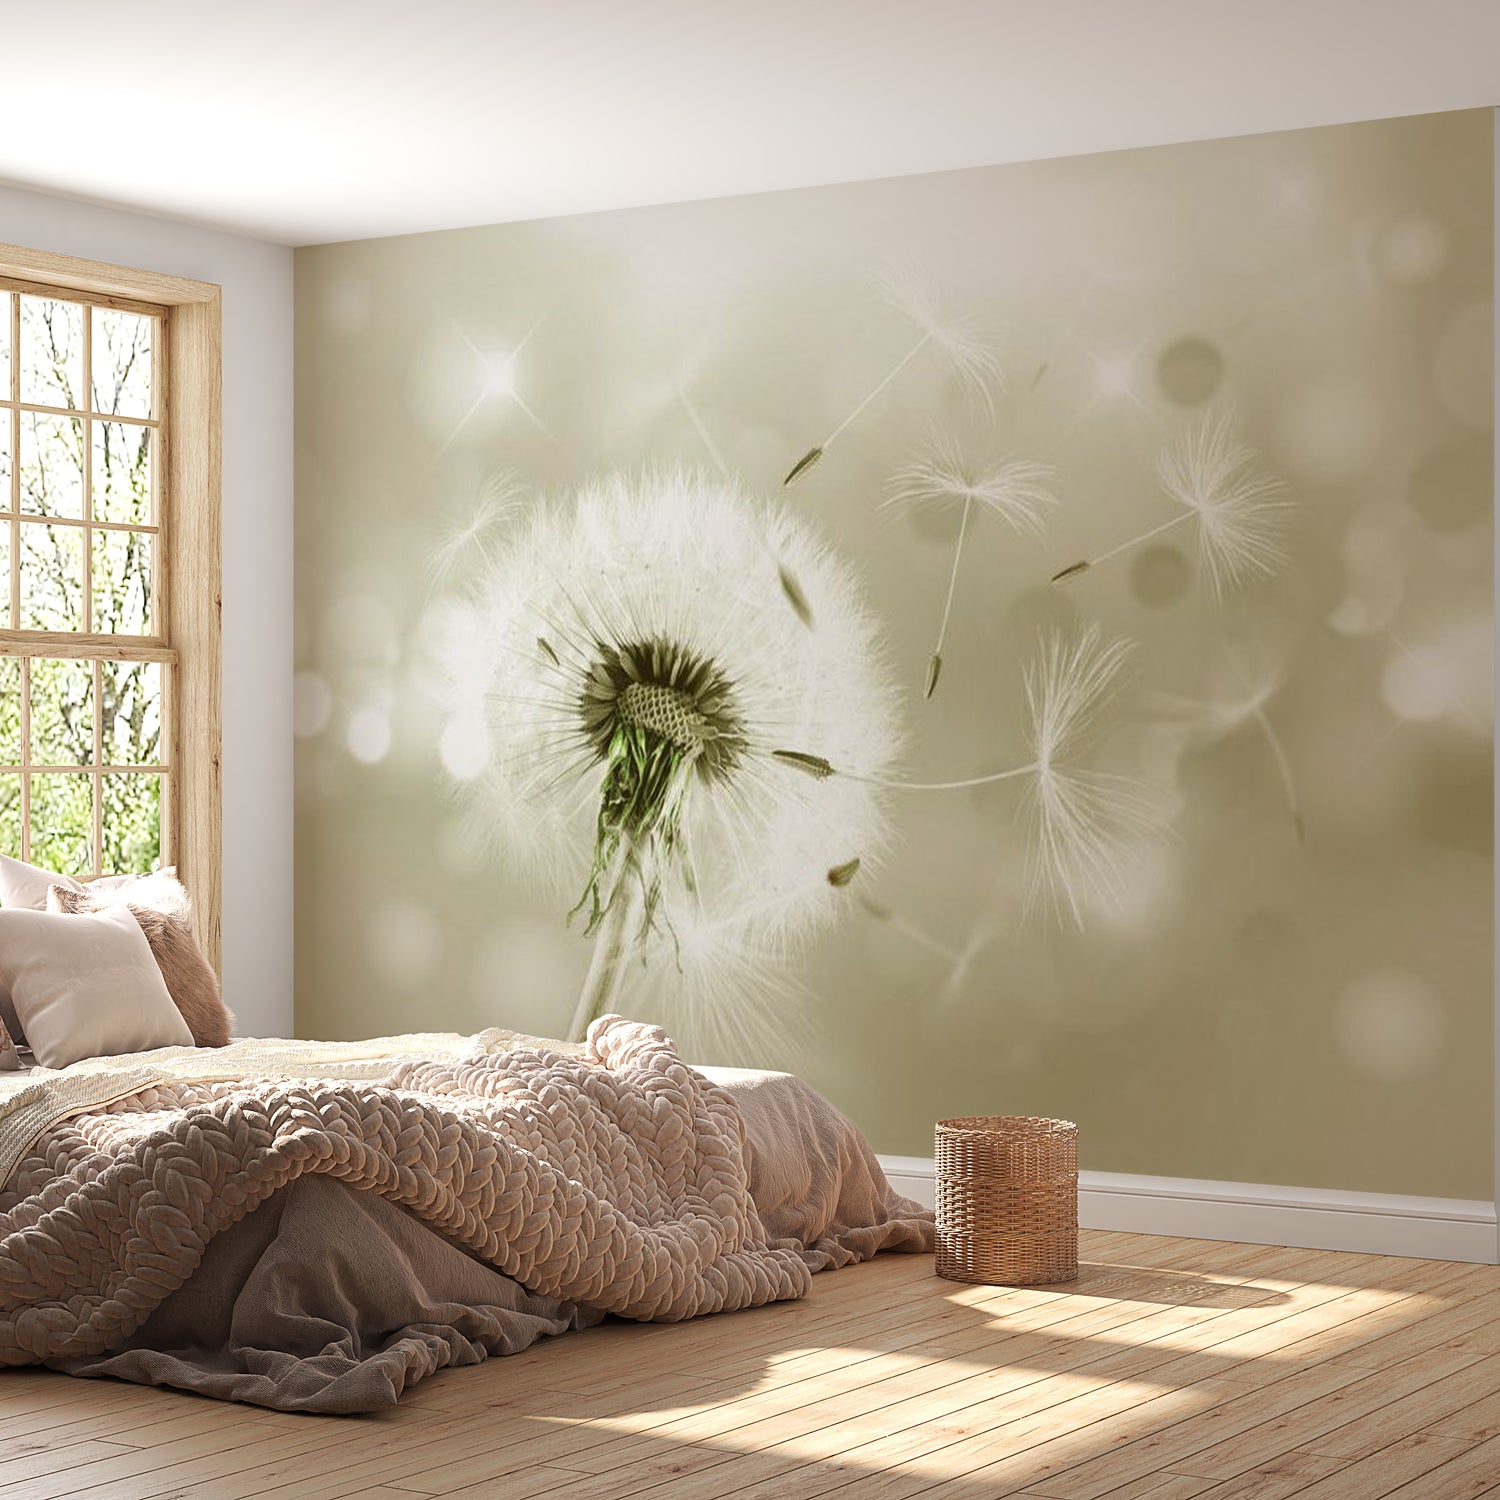 Floral Wallpaper Wall Mural - Dandelion Sparks